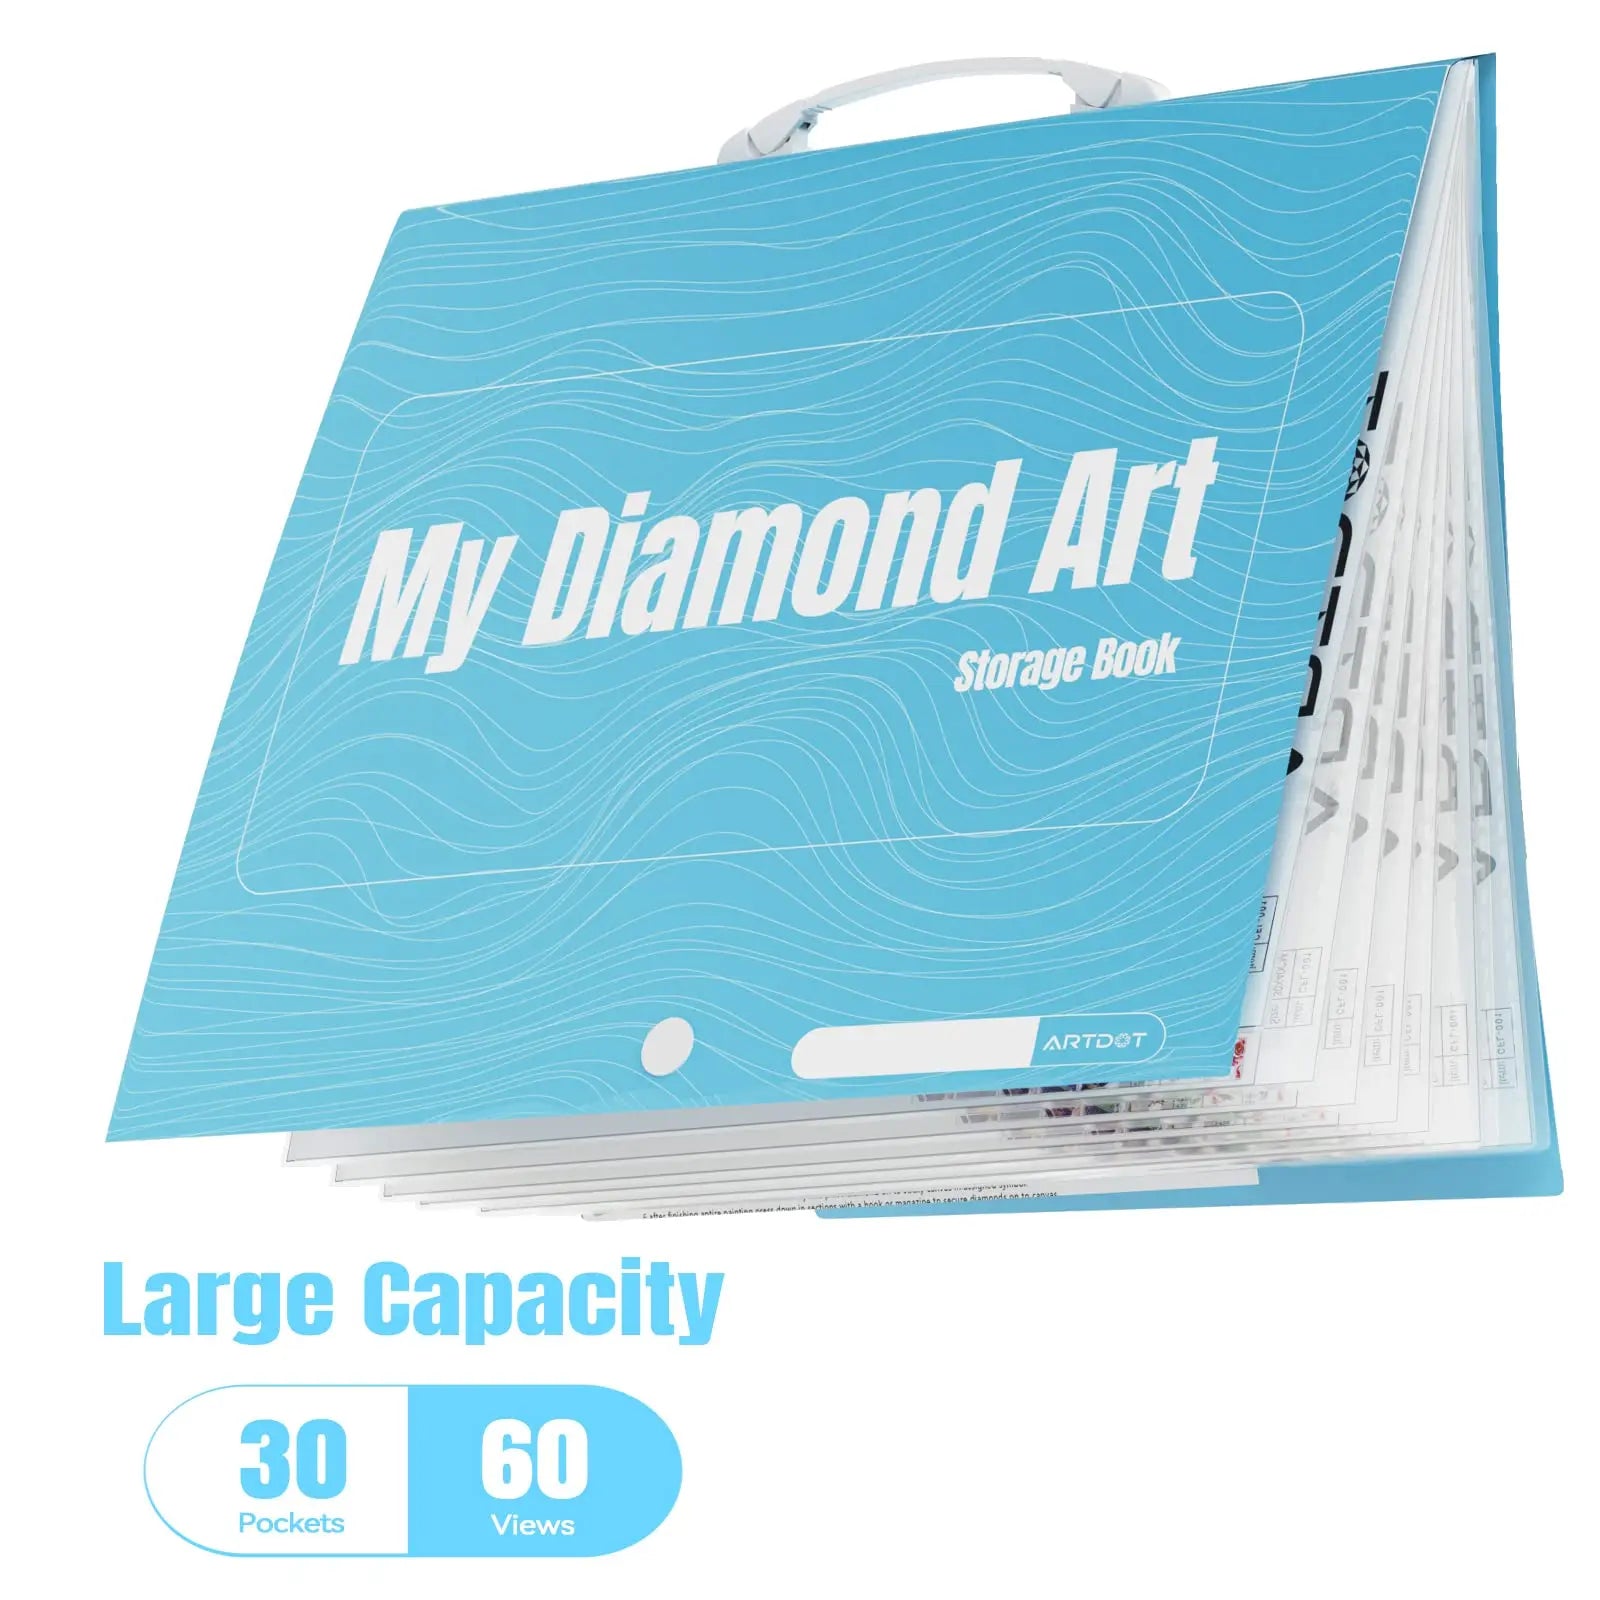 Ask the filter!! Diamond art supplies edition!! #diamondartwithave